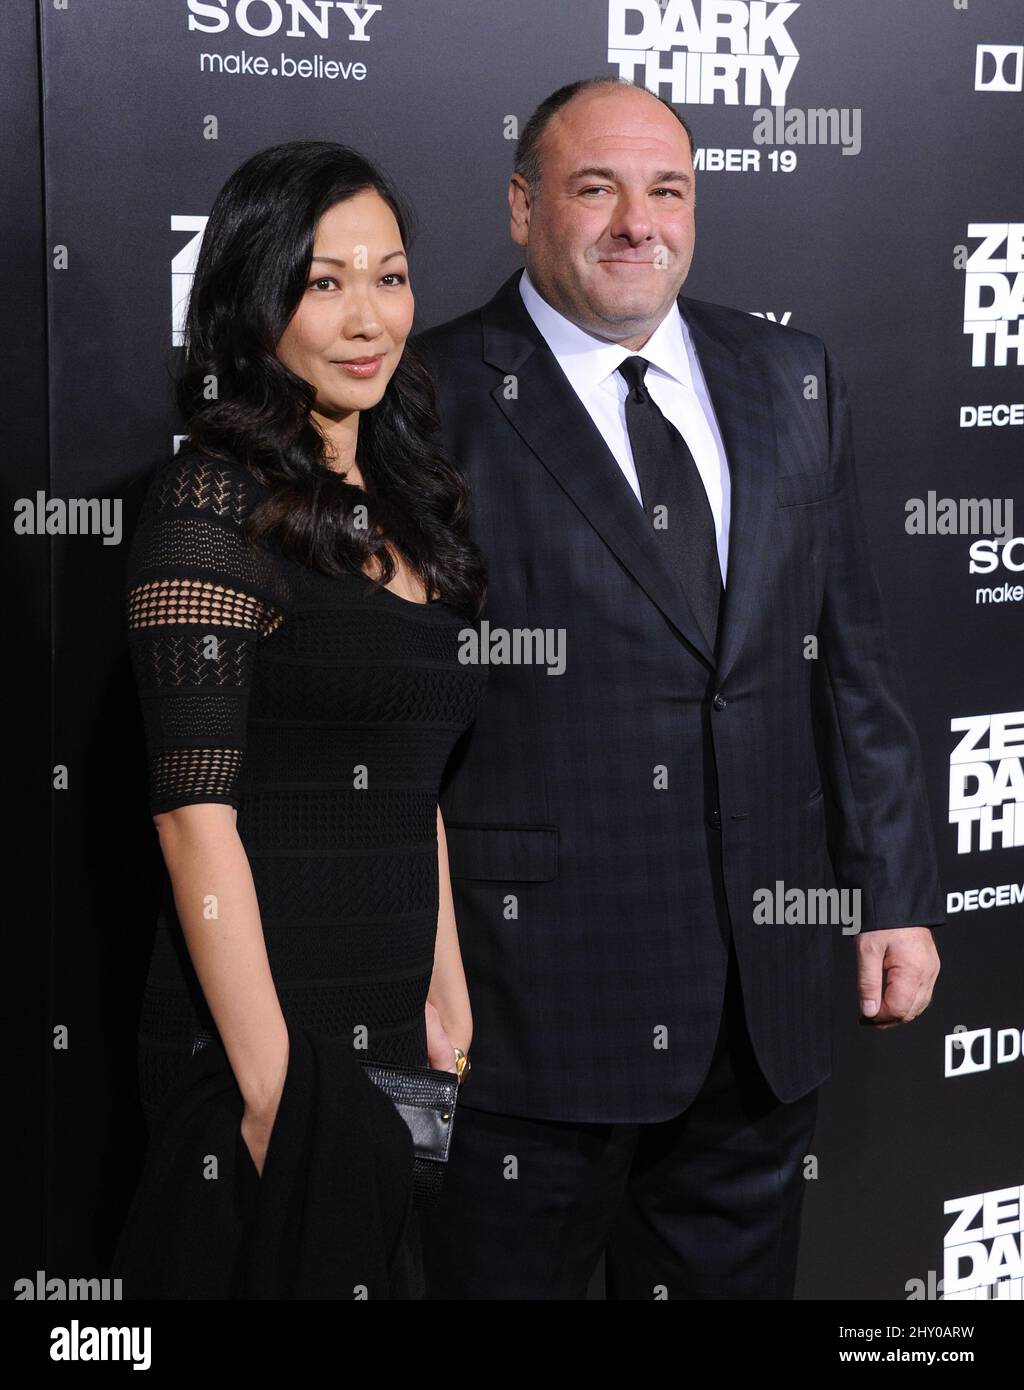 James Gandolfini & Deborah Lin attending the premiere of 'Zero Dark Thirty' in Hollywood, California. Stock Photo